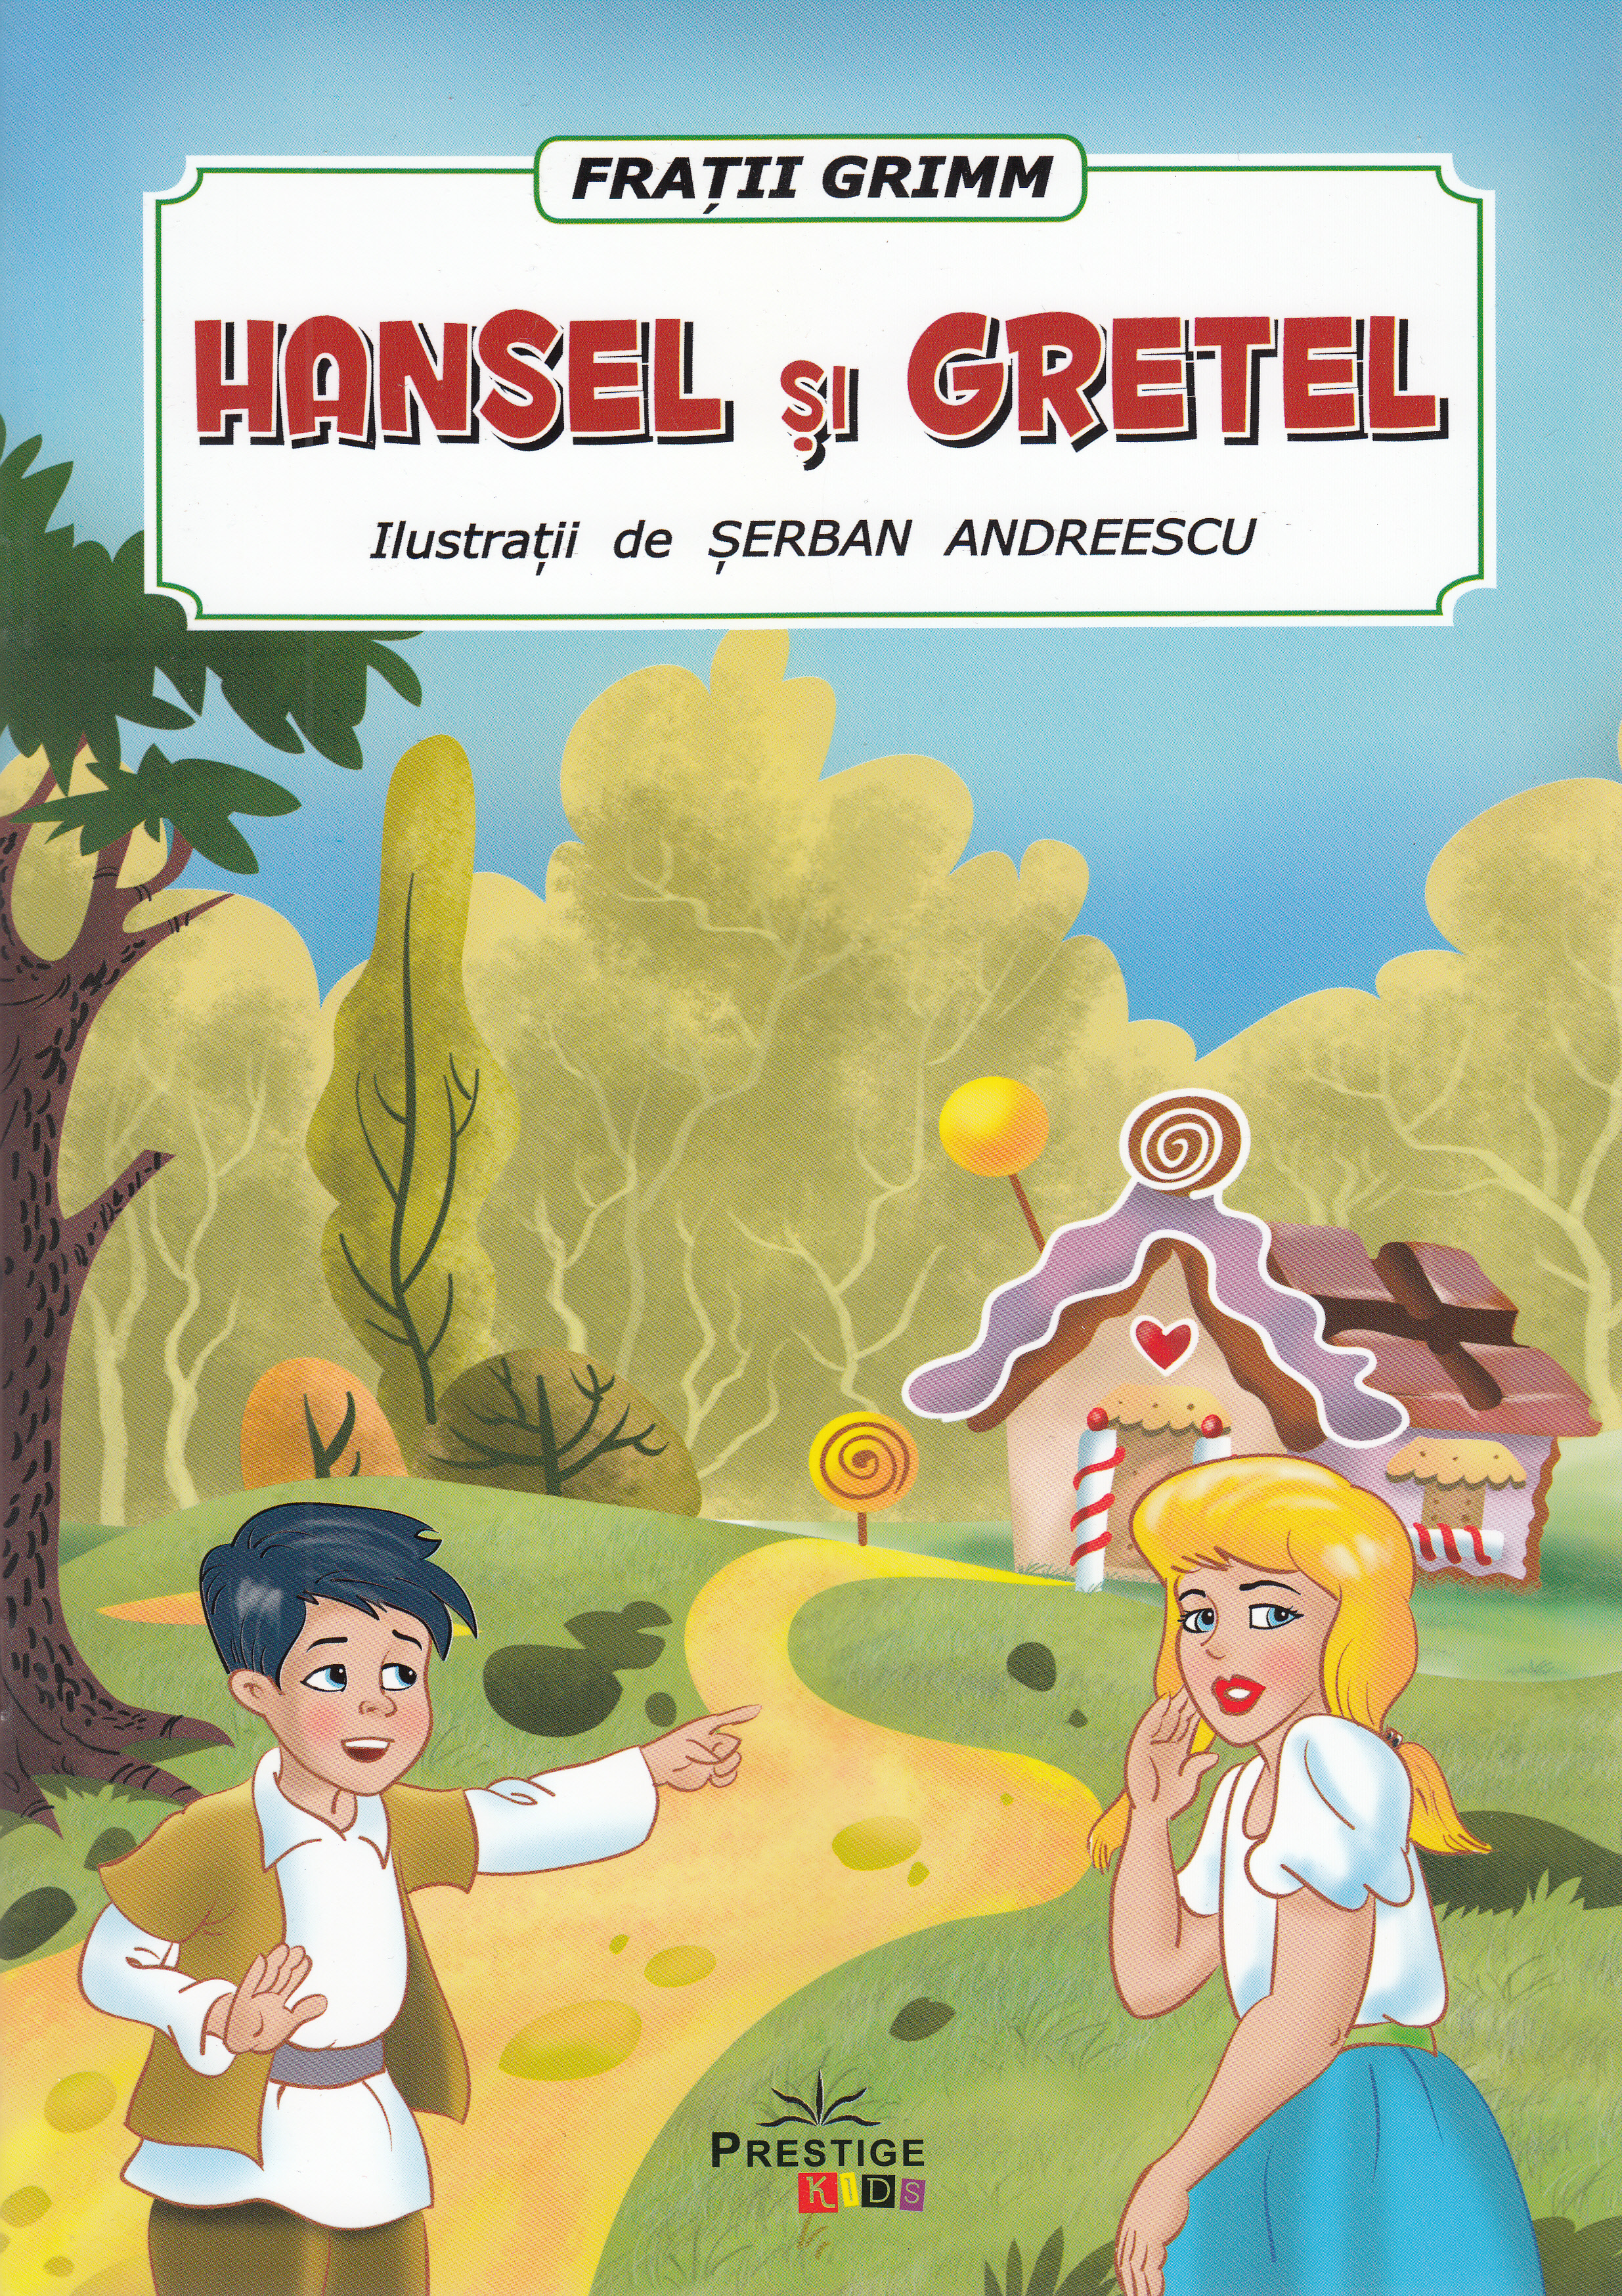 Hansel si Gretel - Fratii Grimm